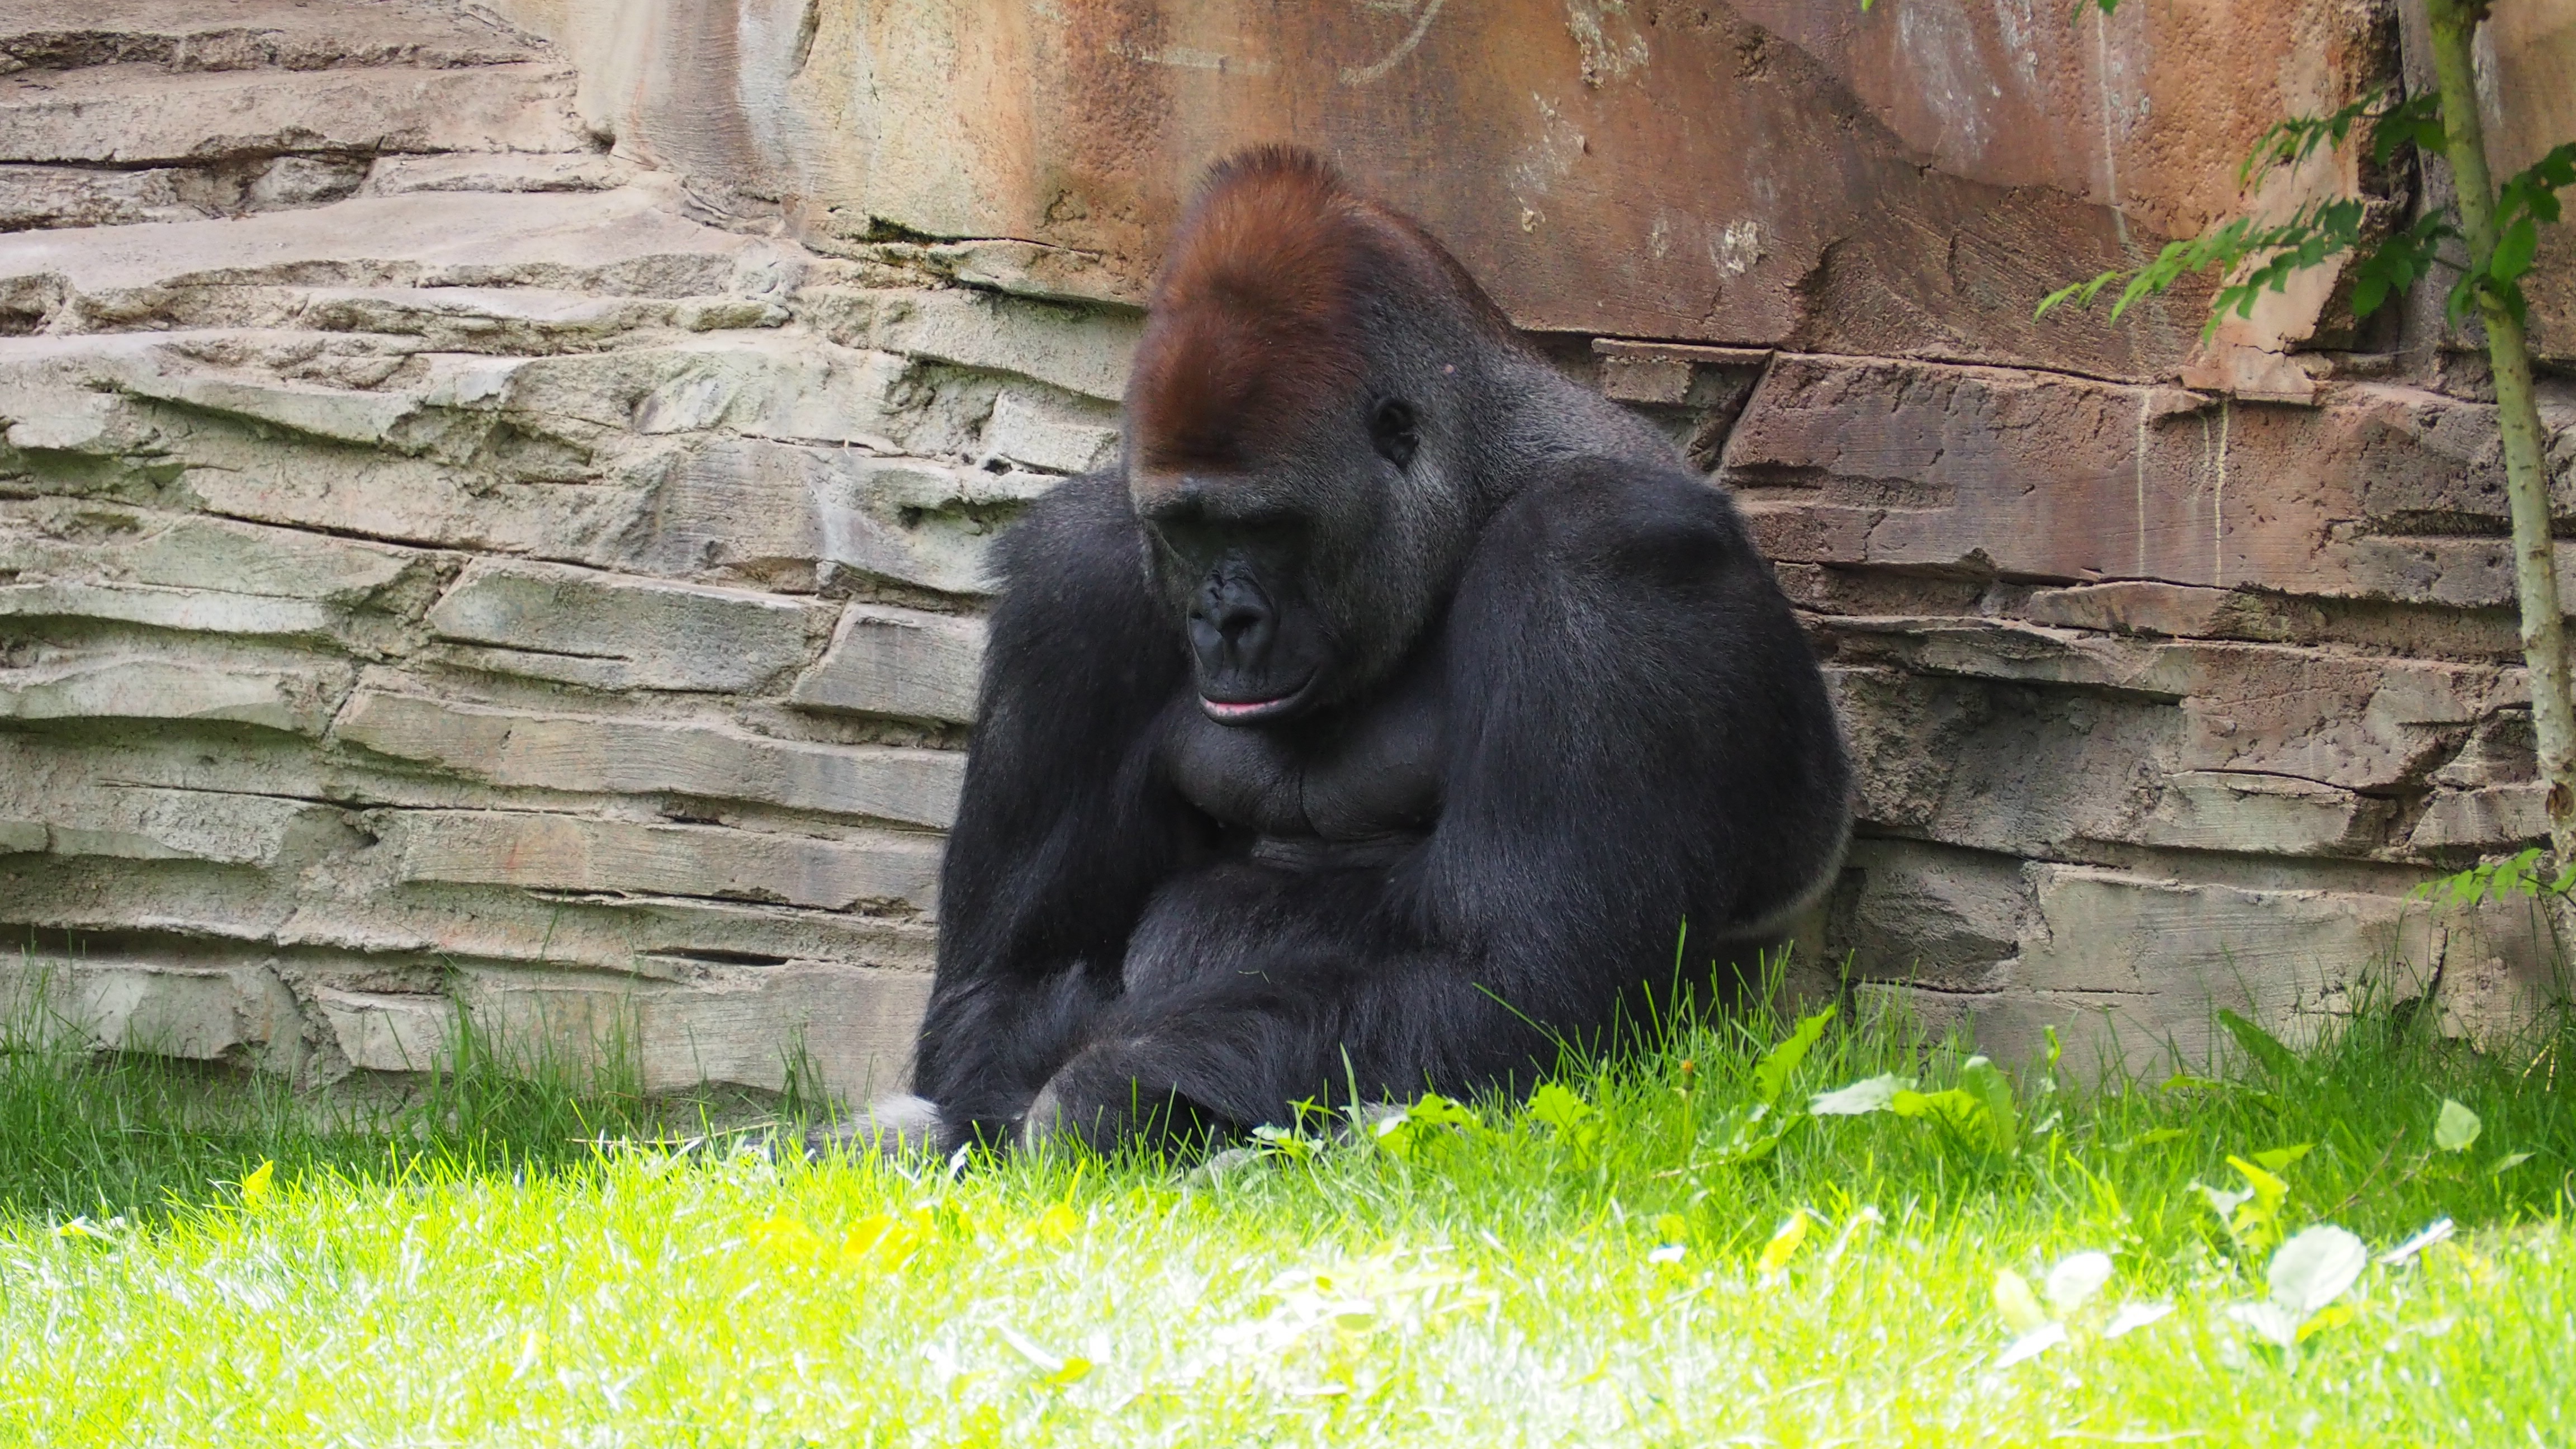 black coated gorilla